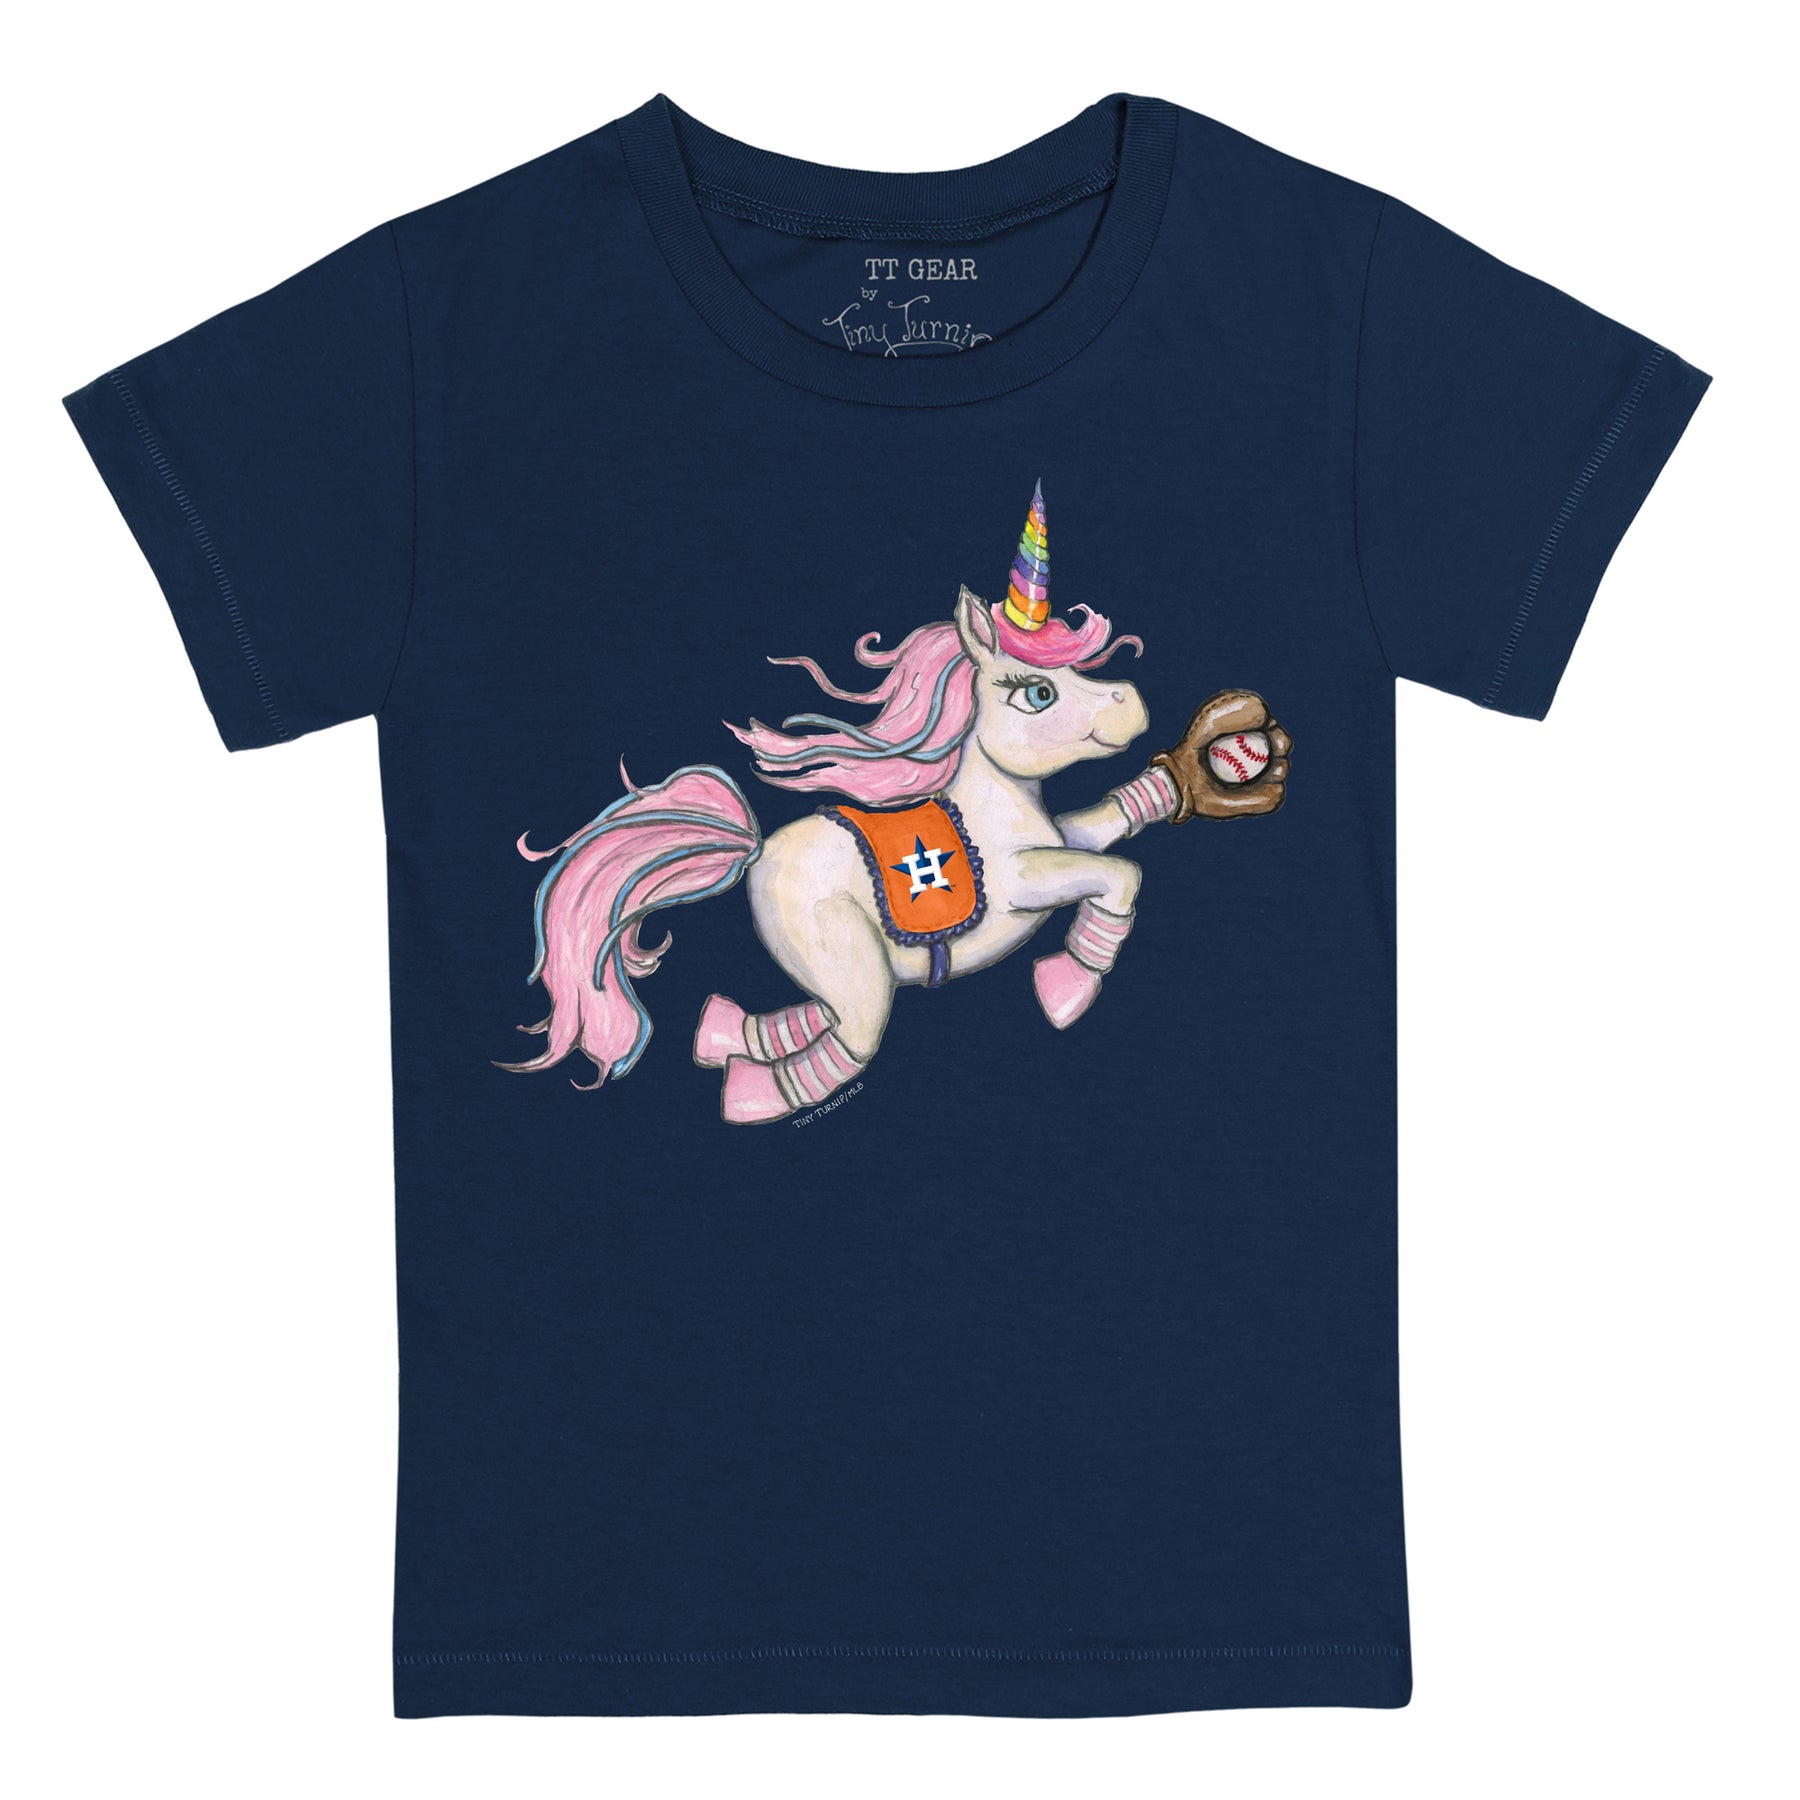 astros unicorn shirt